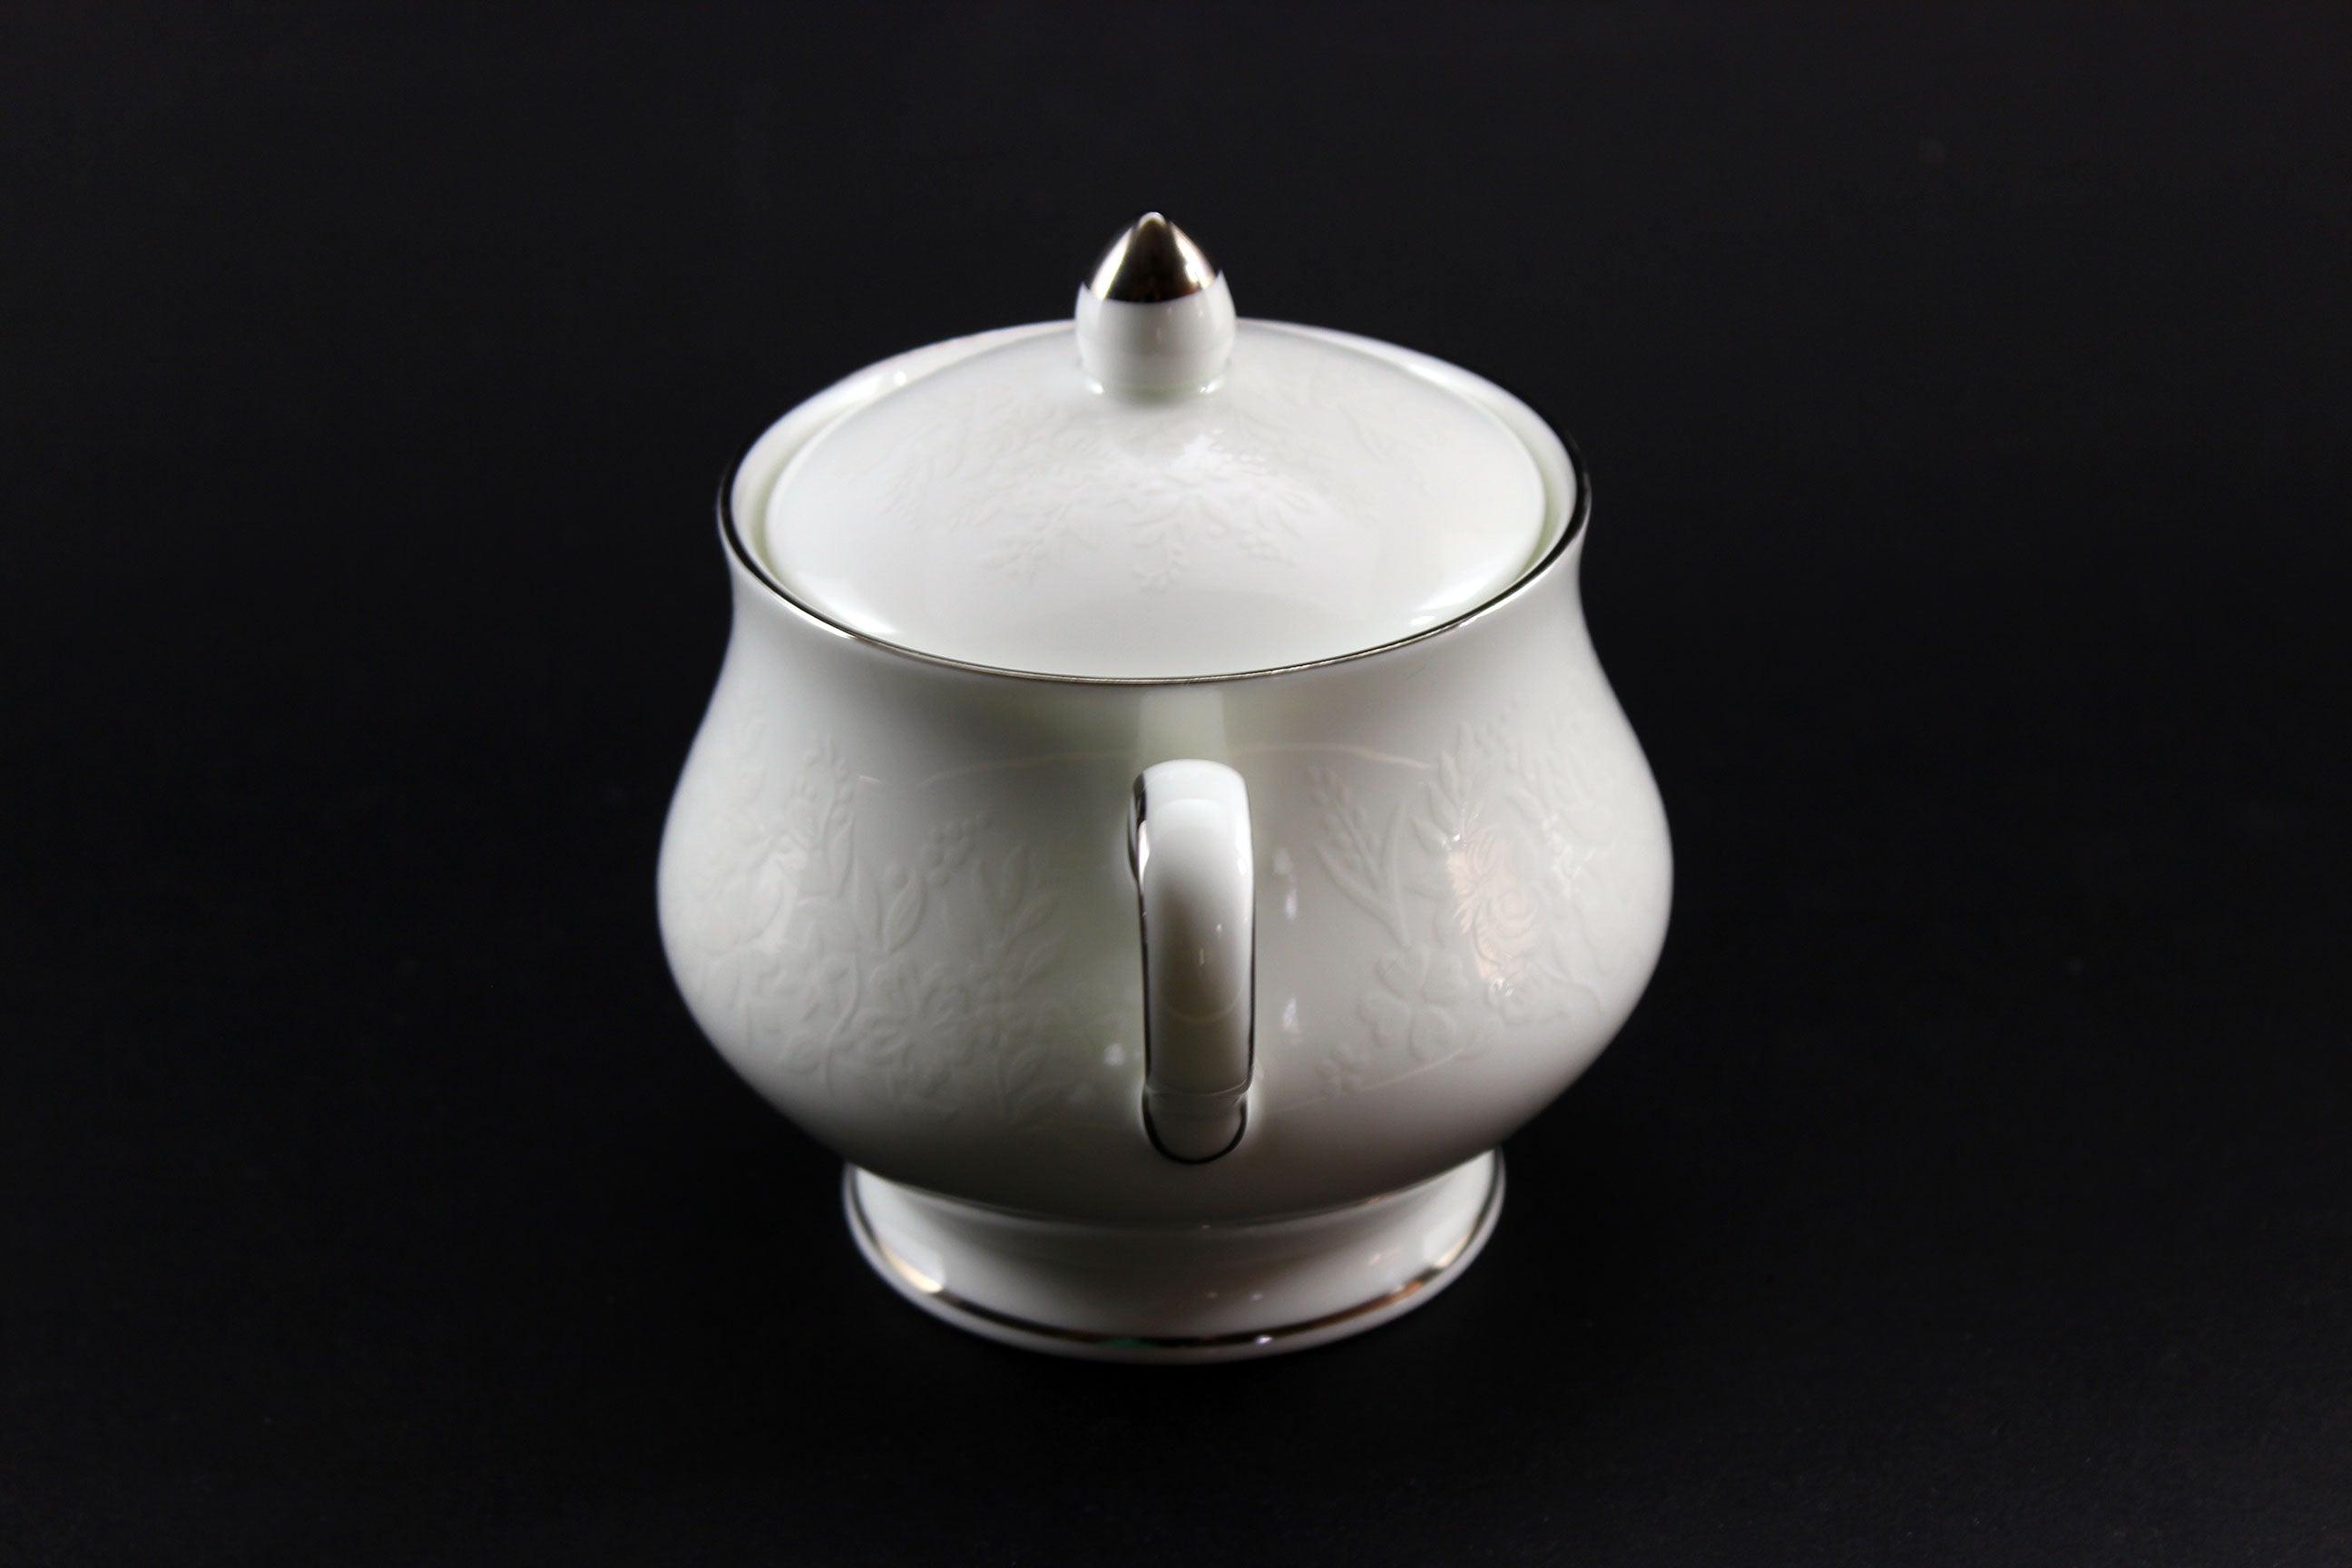 Wedgwood Silver Ermine Bone China,  Teapot, Cream and Sugar